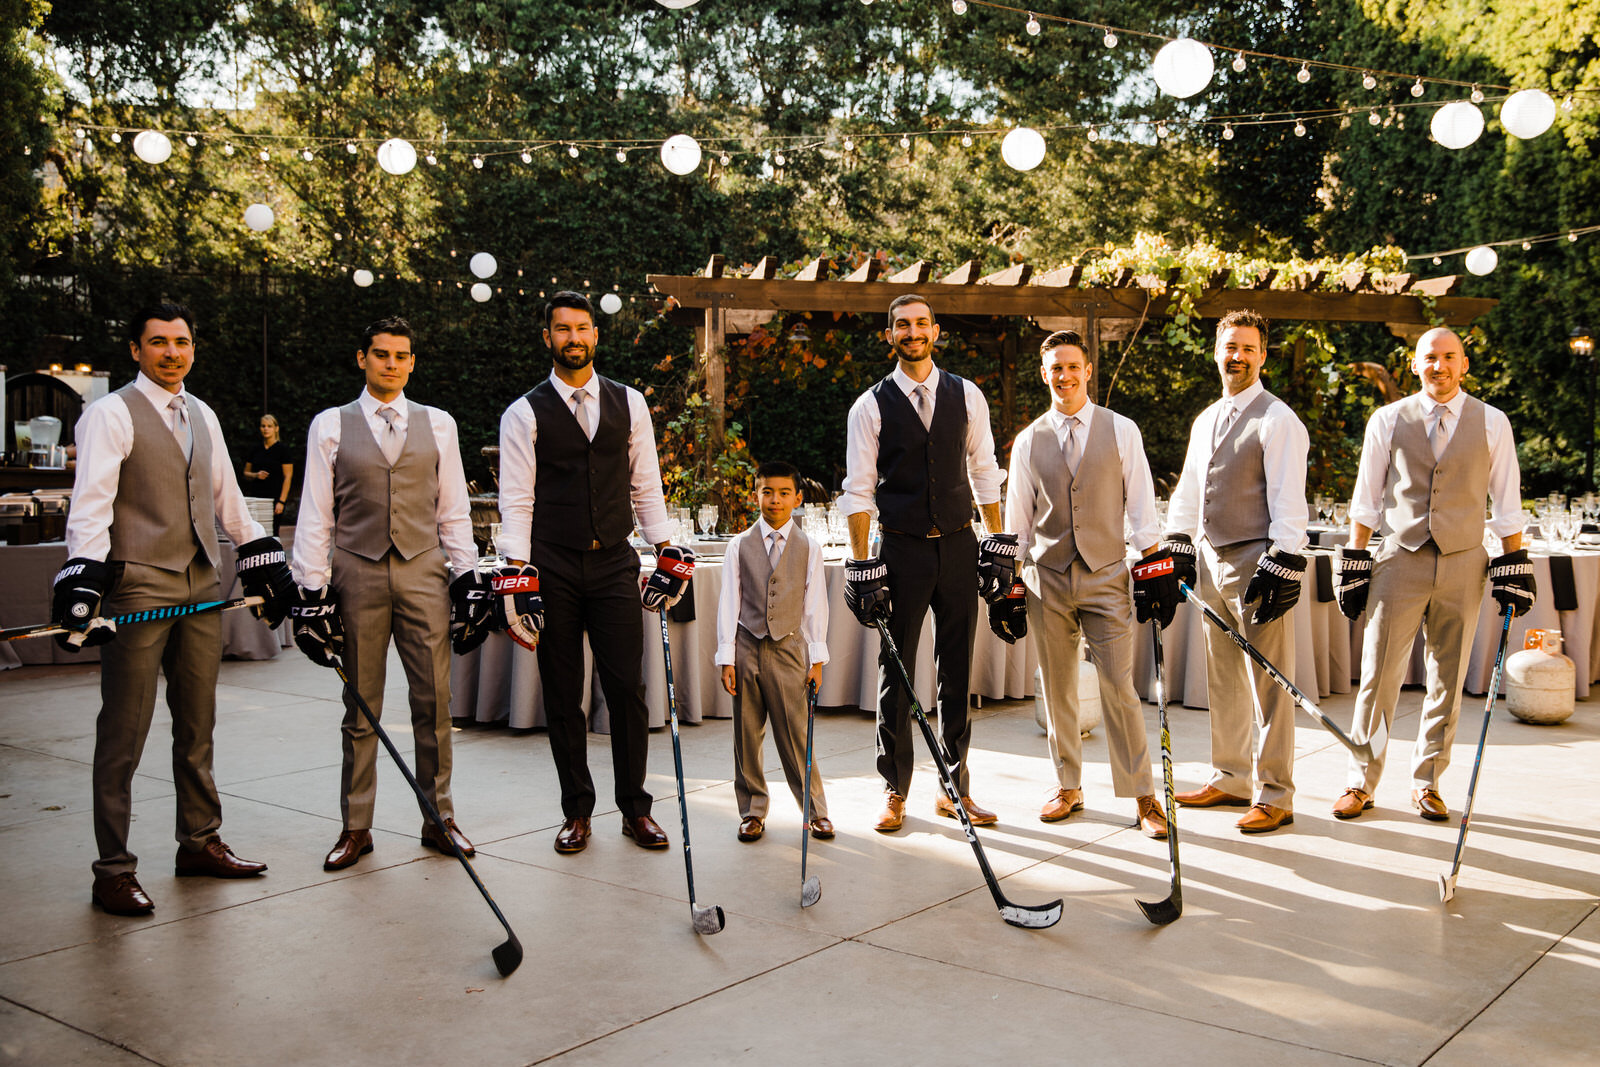 Candid, warm wedding photography | Groom and Groomsmen with Hockey Sticks | Franciscan Gardens wedding in San Juan Capistrano, CA by Kept Record www.keptrecord.com